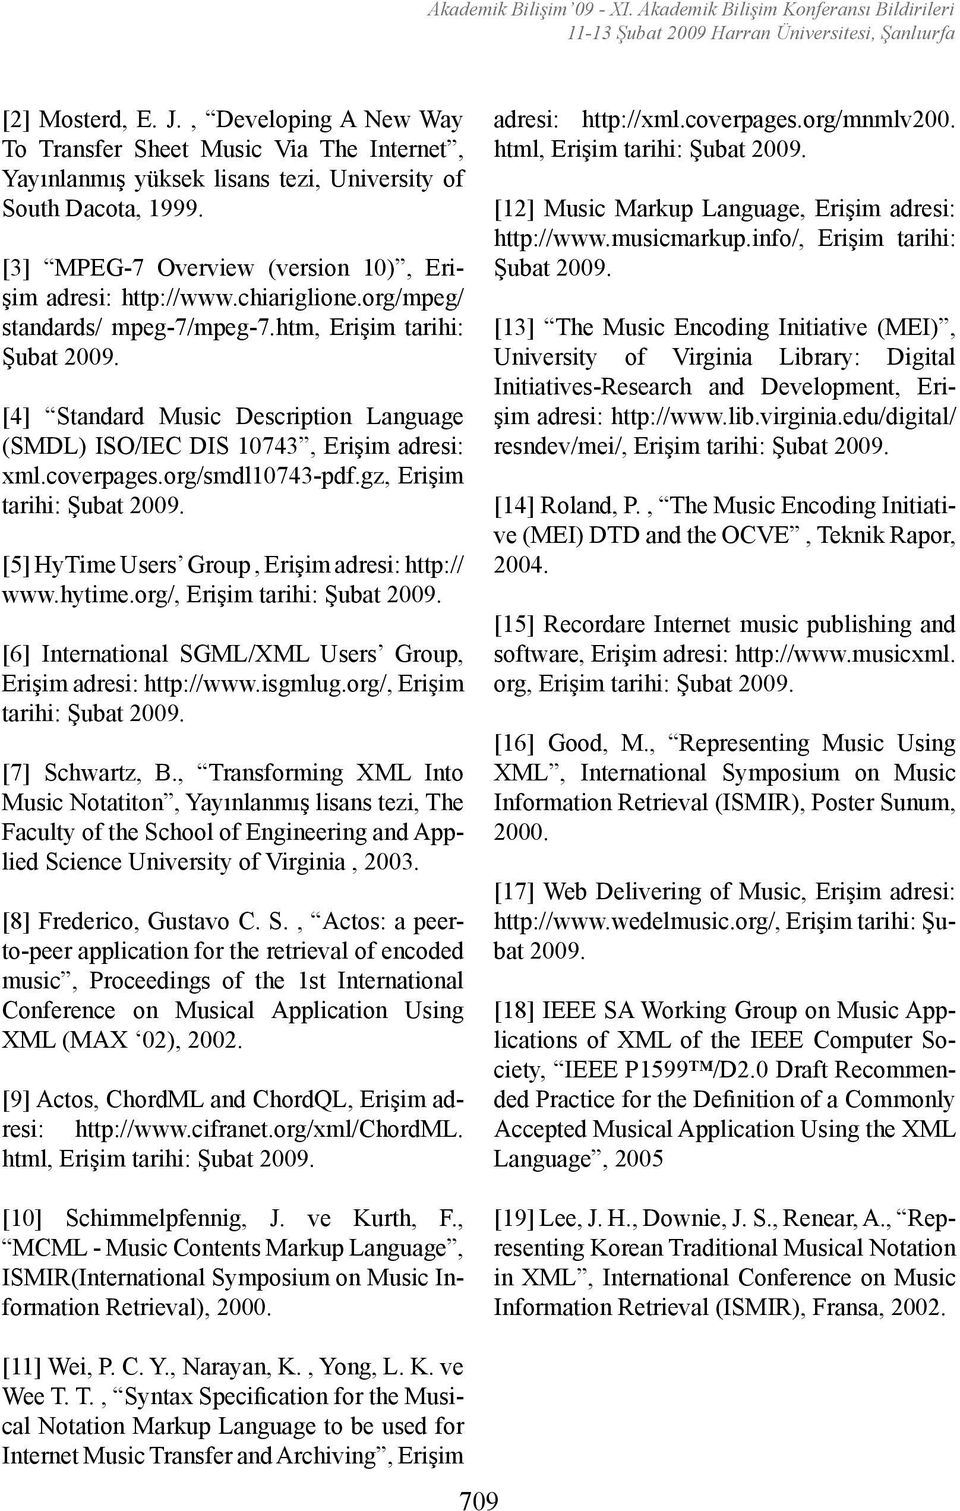 [4] Standard Music Description Language (SMDL) ISO/IEC DIS 10743, Erişim adresi: xml.coverpages.org/smdl10743-pdf.gz, Erişim tarihi: Şubat 2009. [5] HyTime Users Group, Erişim adresi: http:// www.